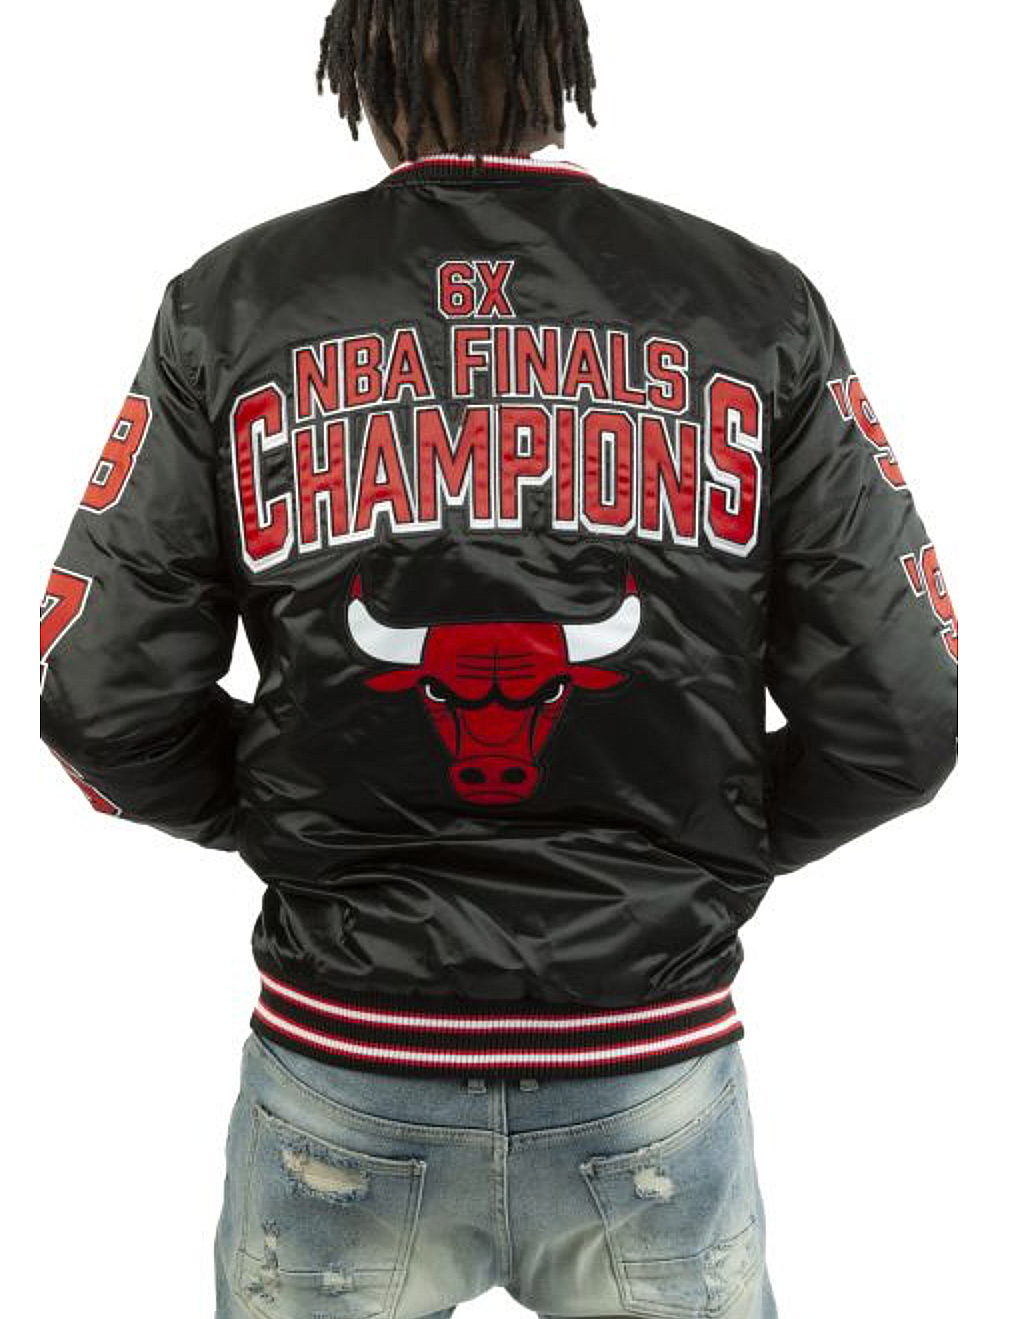 Chicago-Bulls-Starter-6x-Champions-Jacket-4